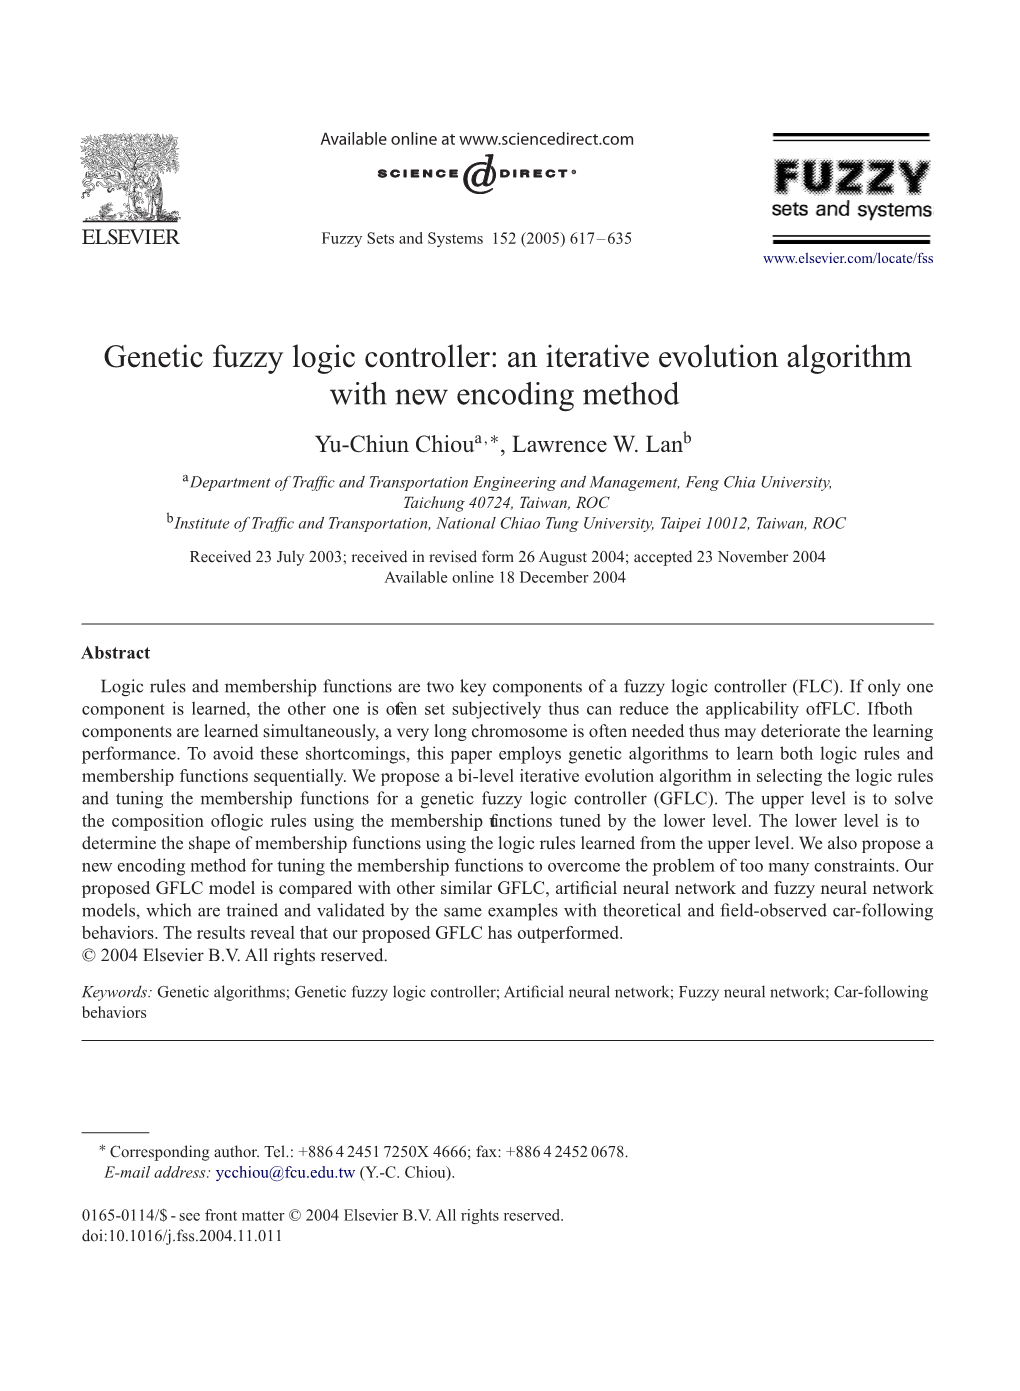 Genetic Fuzzy Logic Controller: an Iterative Evolution Algorithm with New Encoding Method Yu-Chiun Chioua,∗, Lawrence W